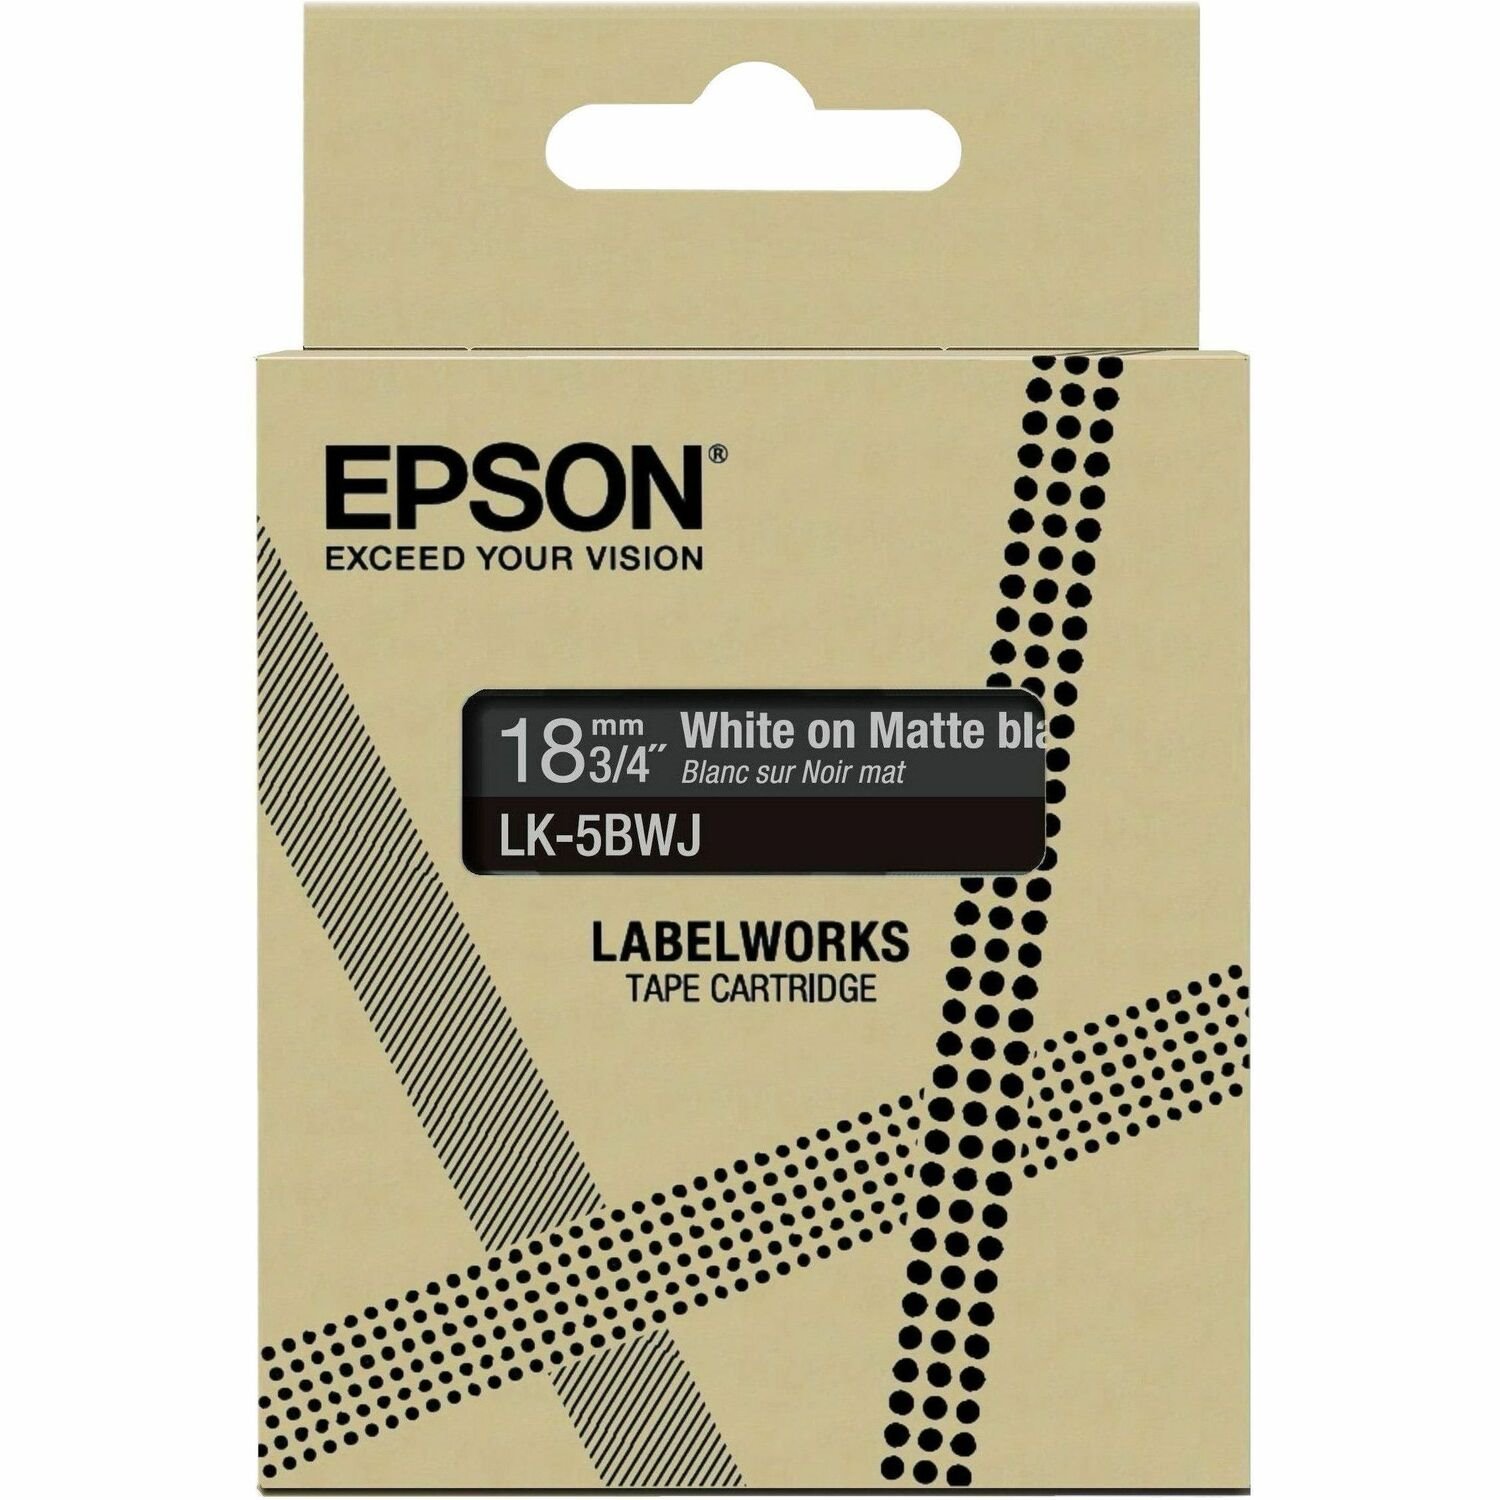 Epson LK-5BWJ Label Tape